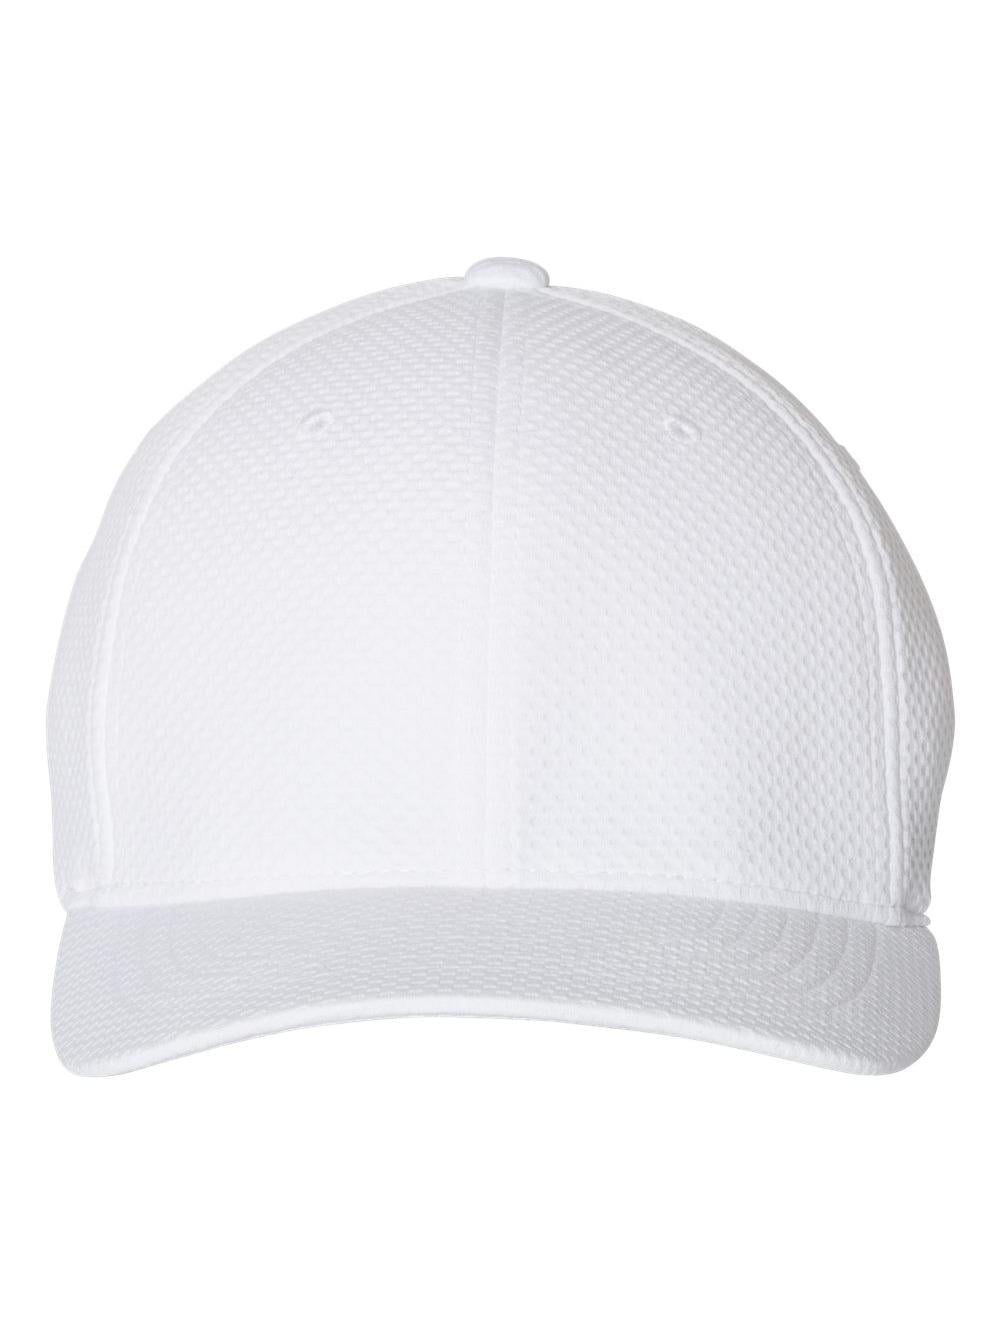 WHITE Hexagon Jersey - - Dry Cool 3D L/XL & Cap Flexfit